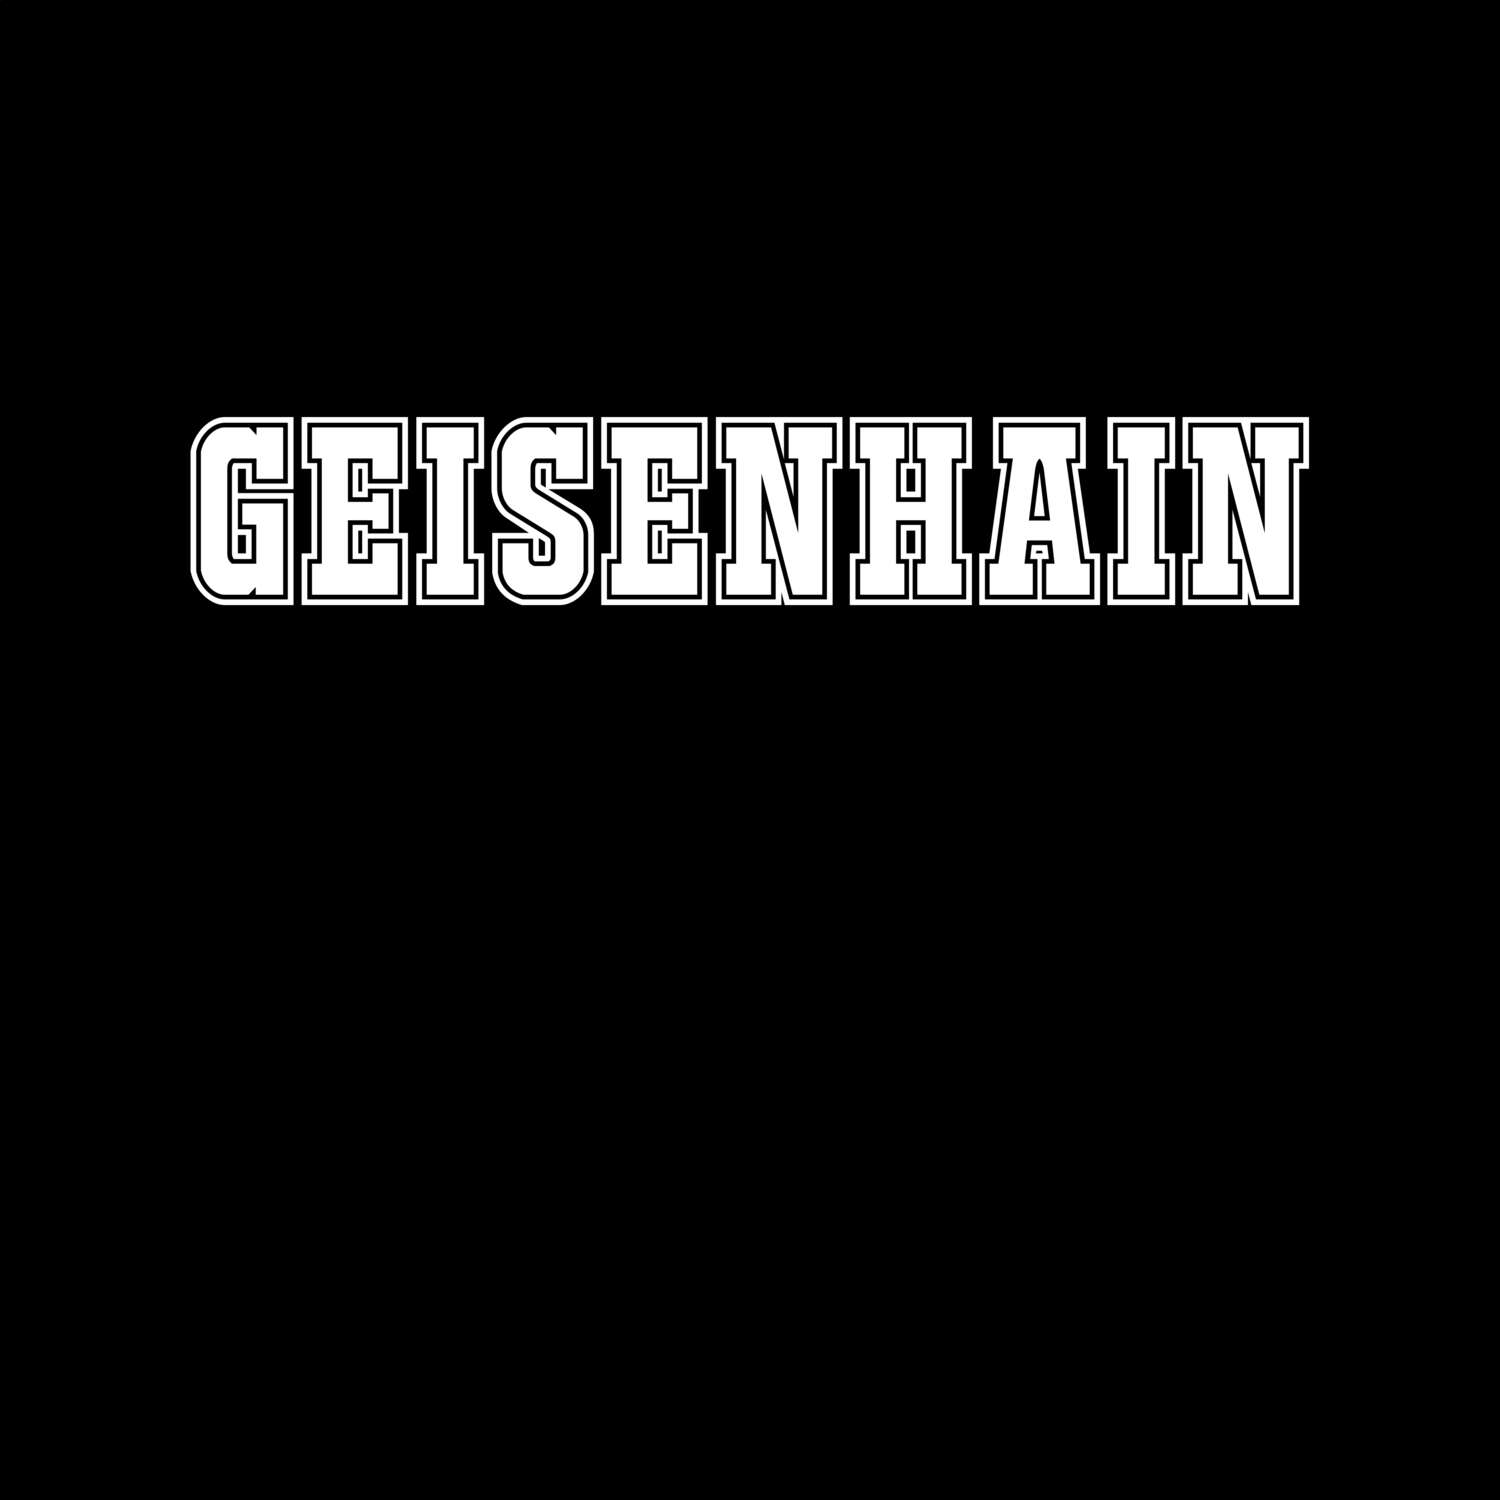 Geisenhain T-Shirt »Classic«